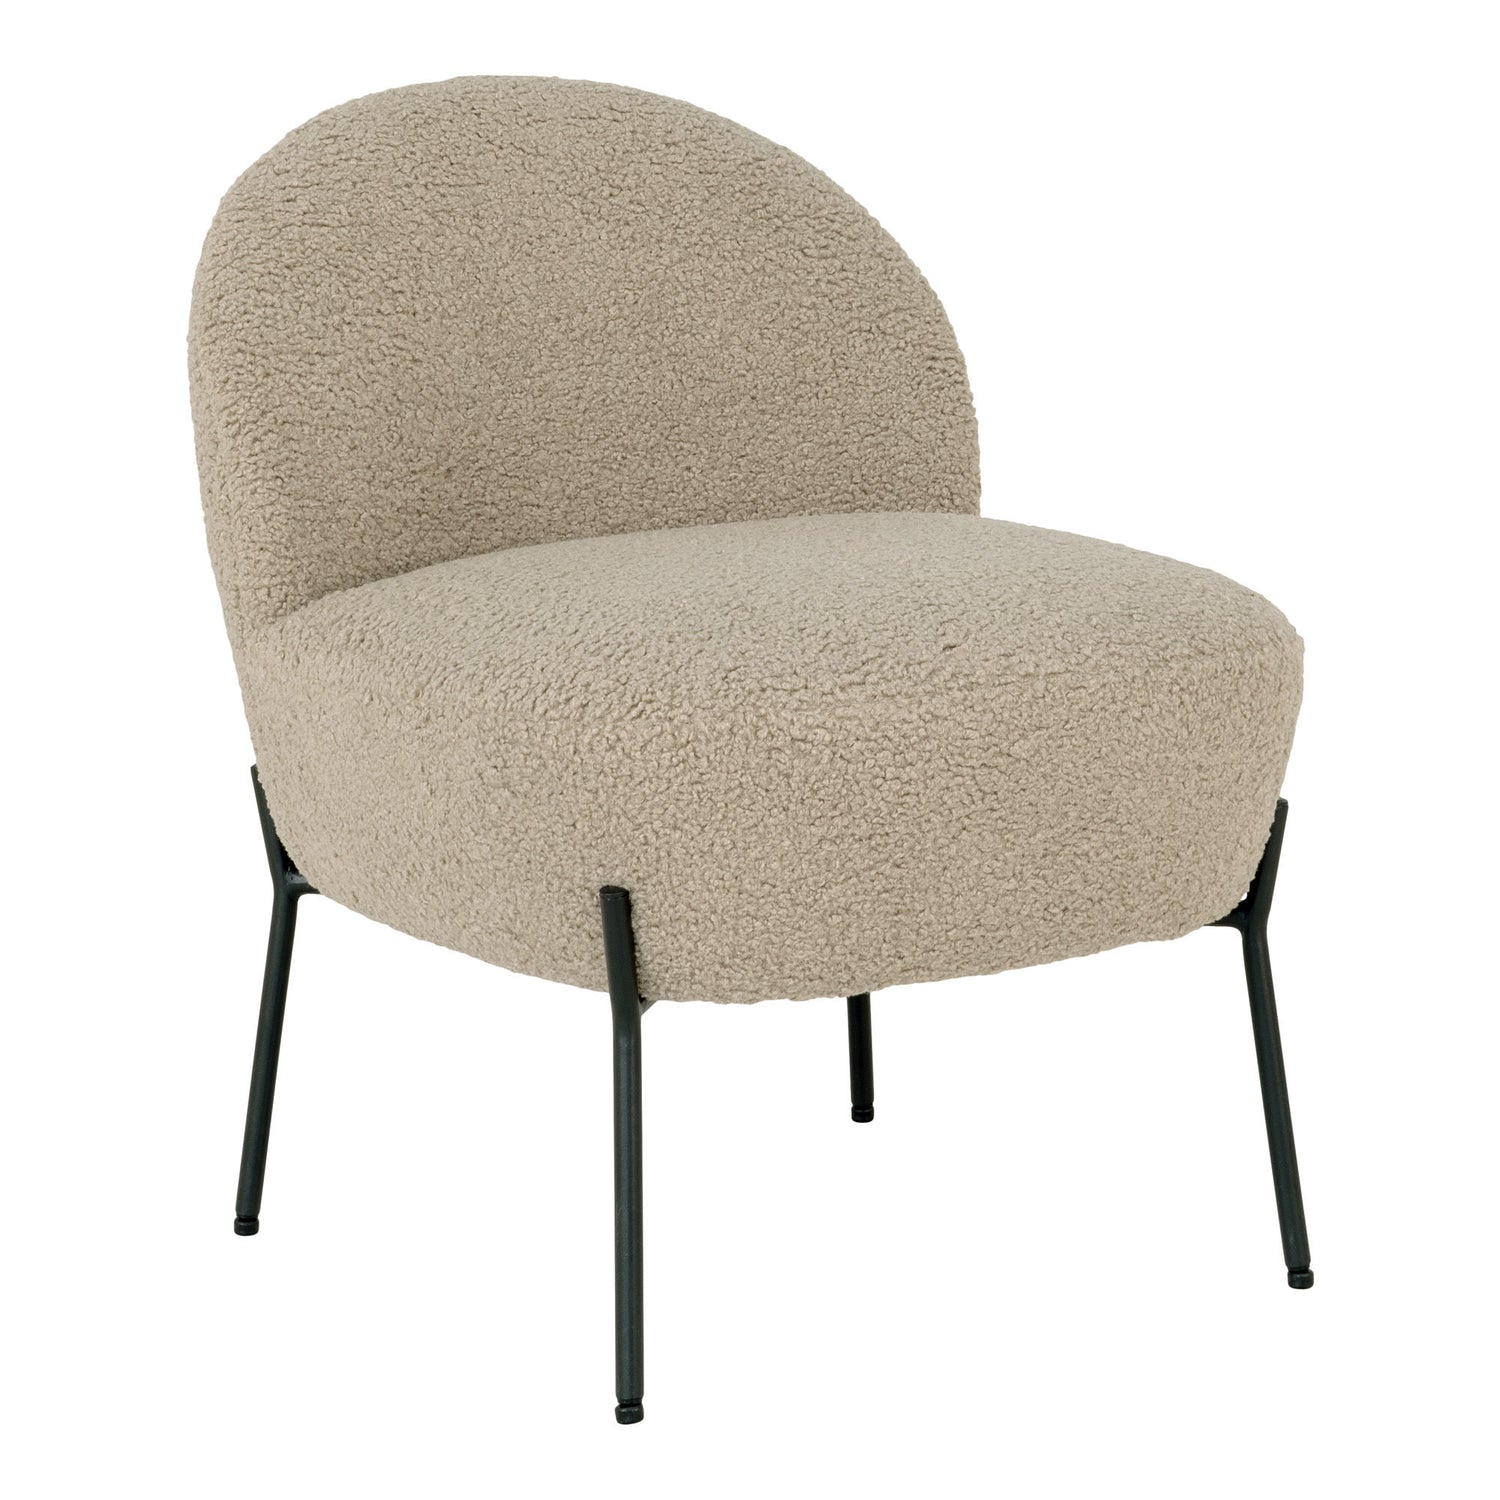 House Nordic - Merida Lounge chair